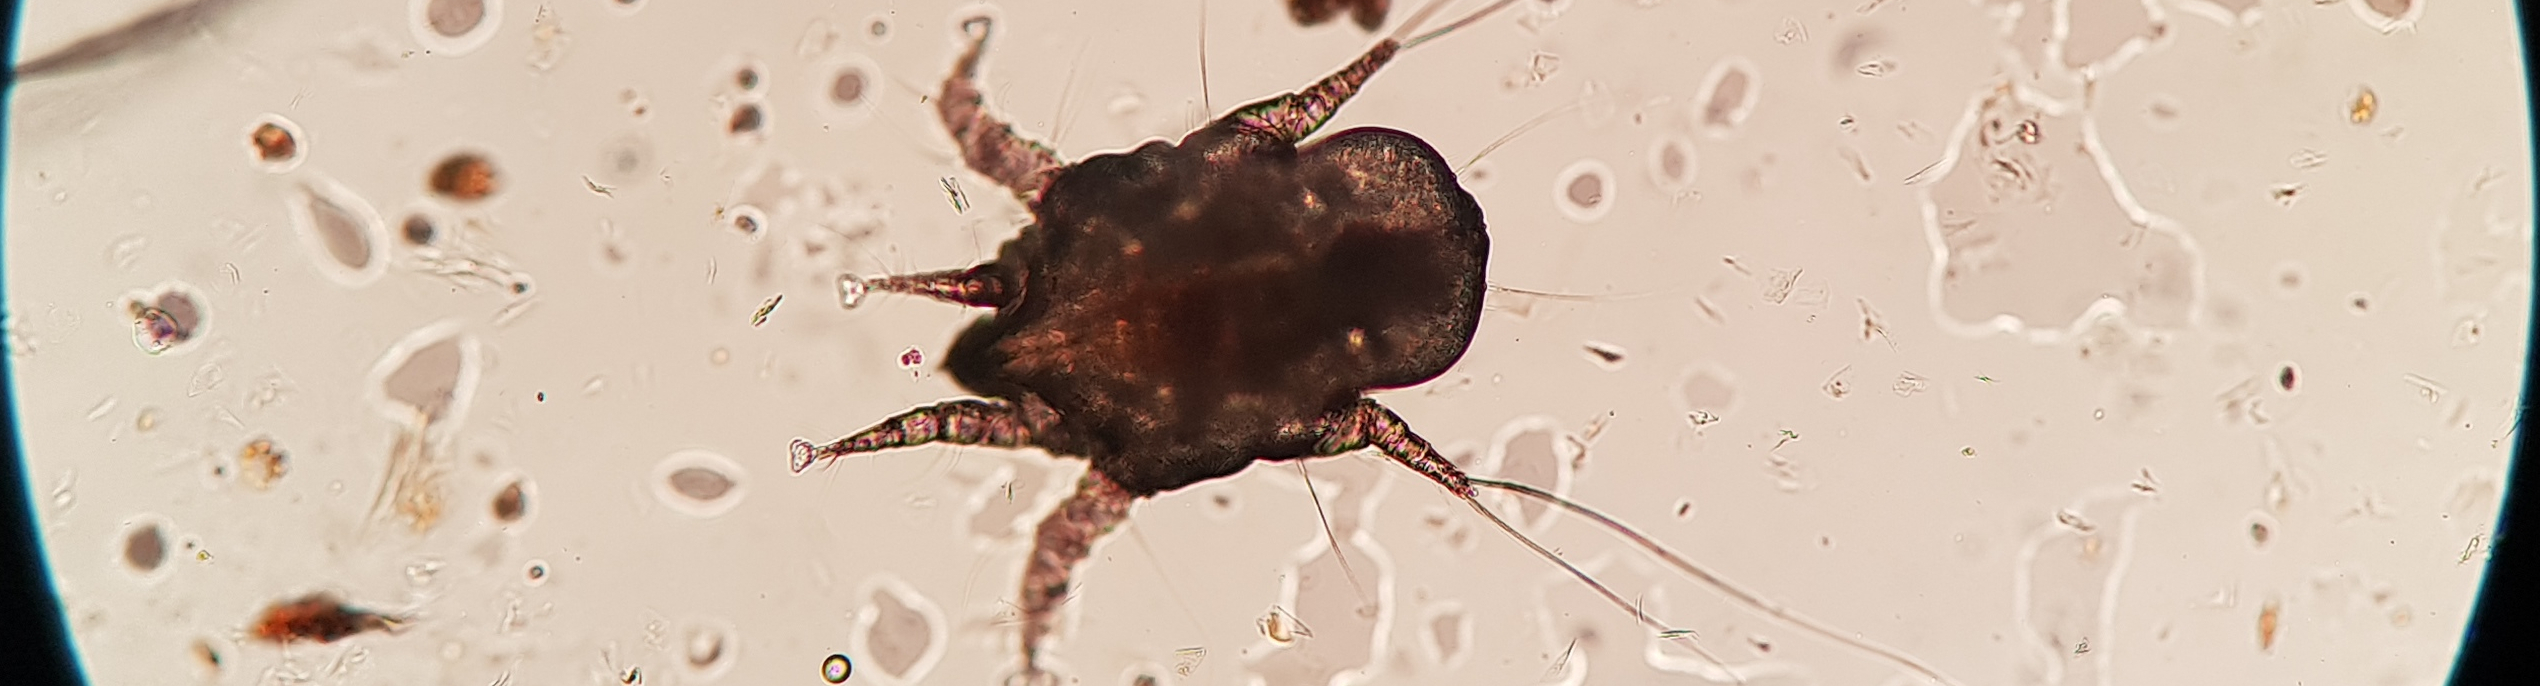 Microscopic image of ear mite